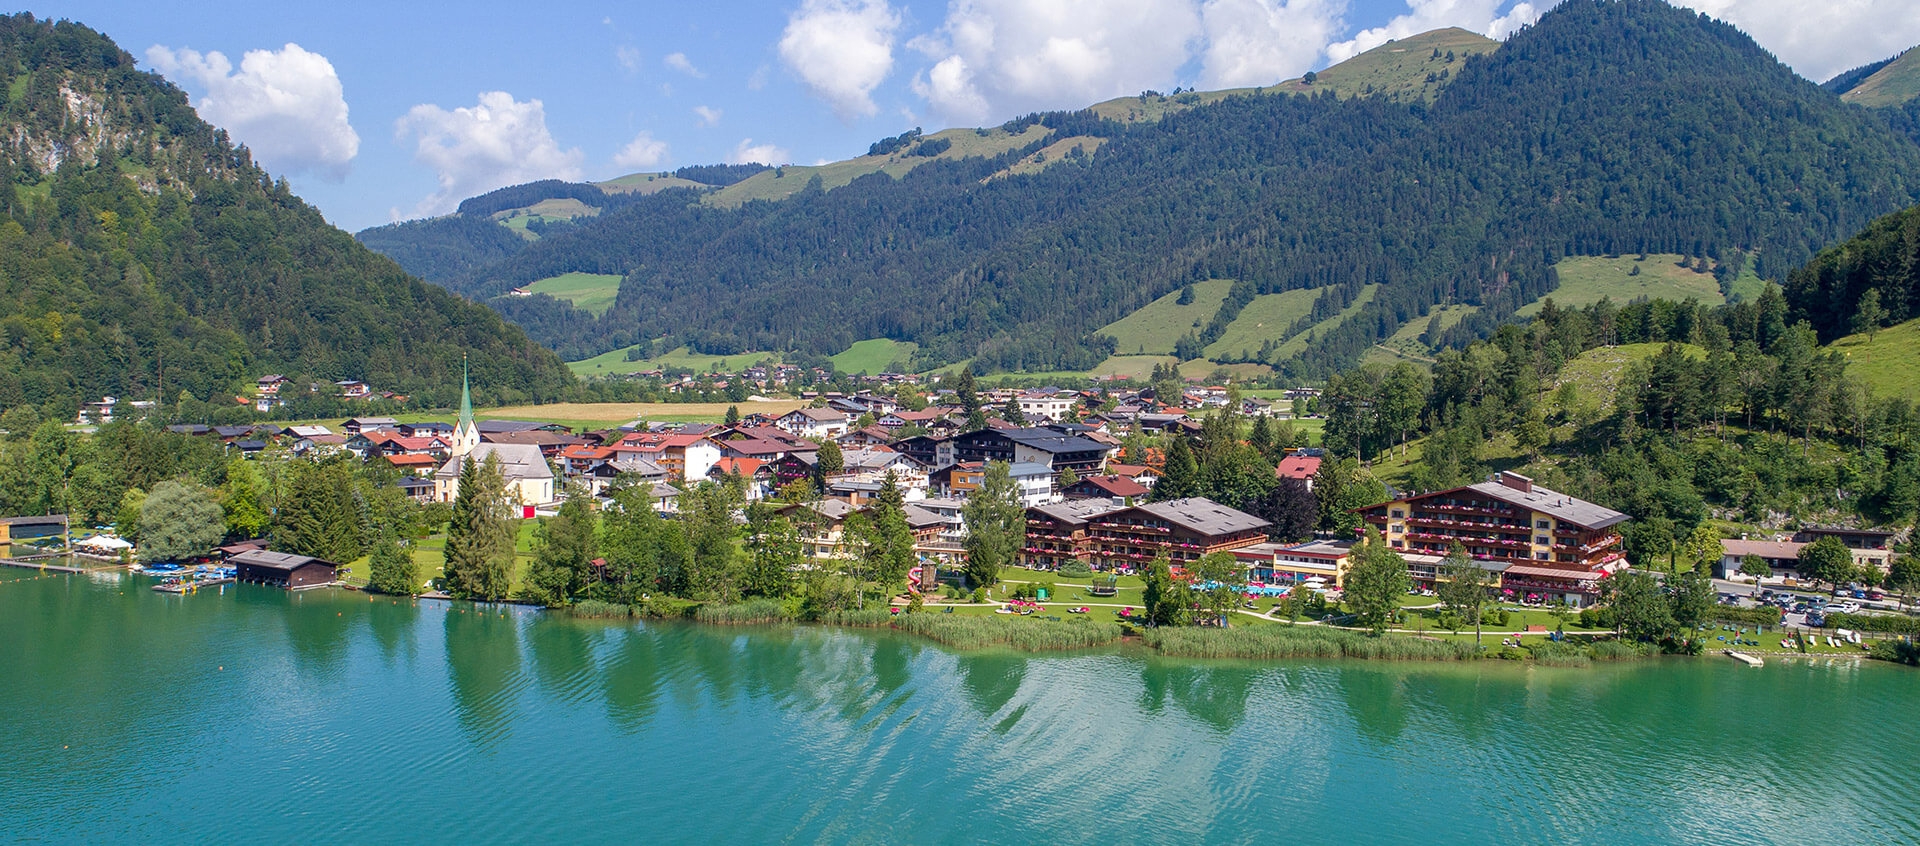 Sommer Urlaub im Kaiserwinkl in Tirol © Bernhard Bergmann